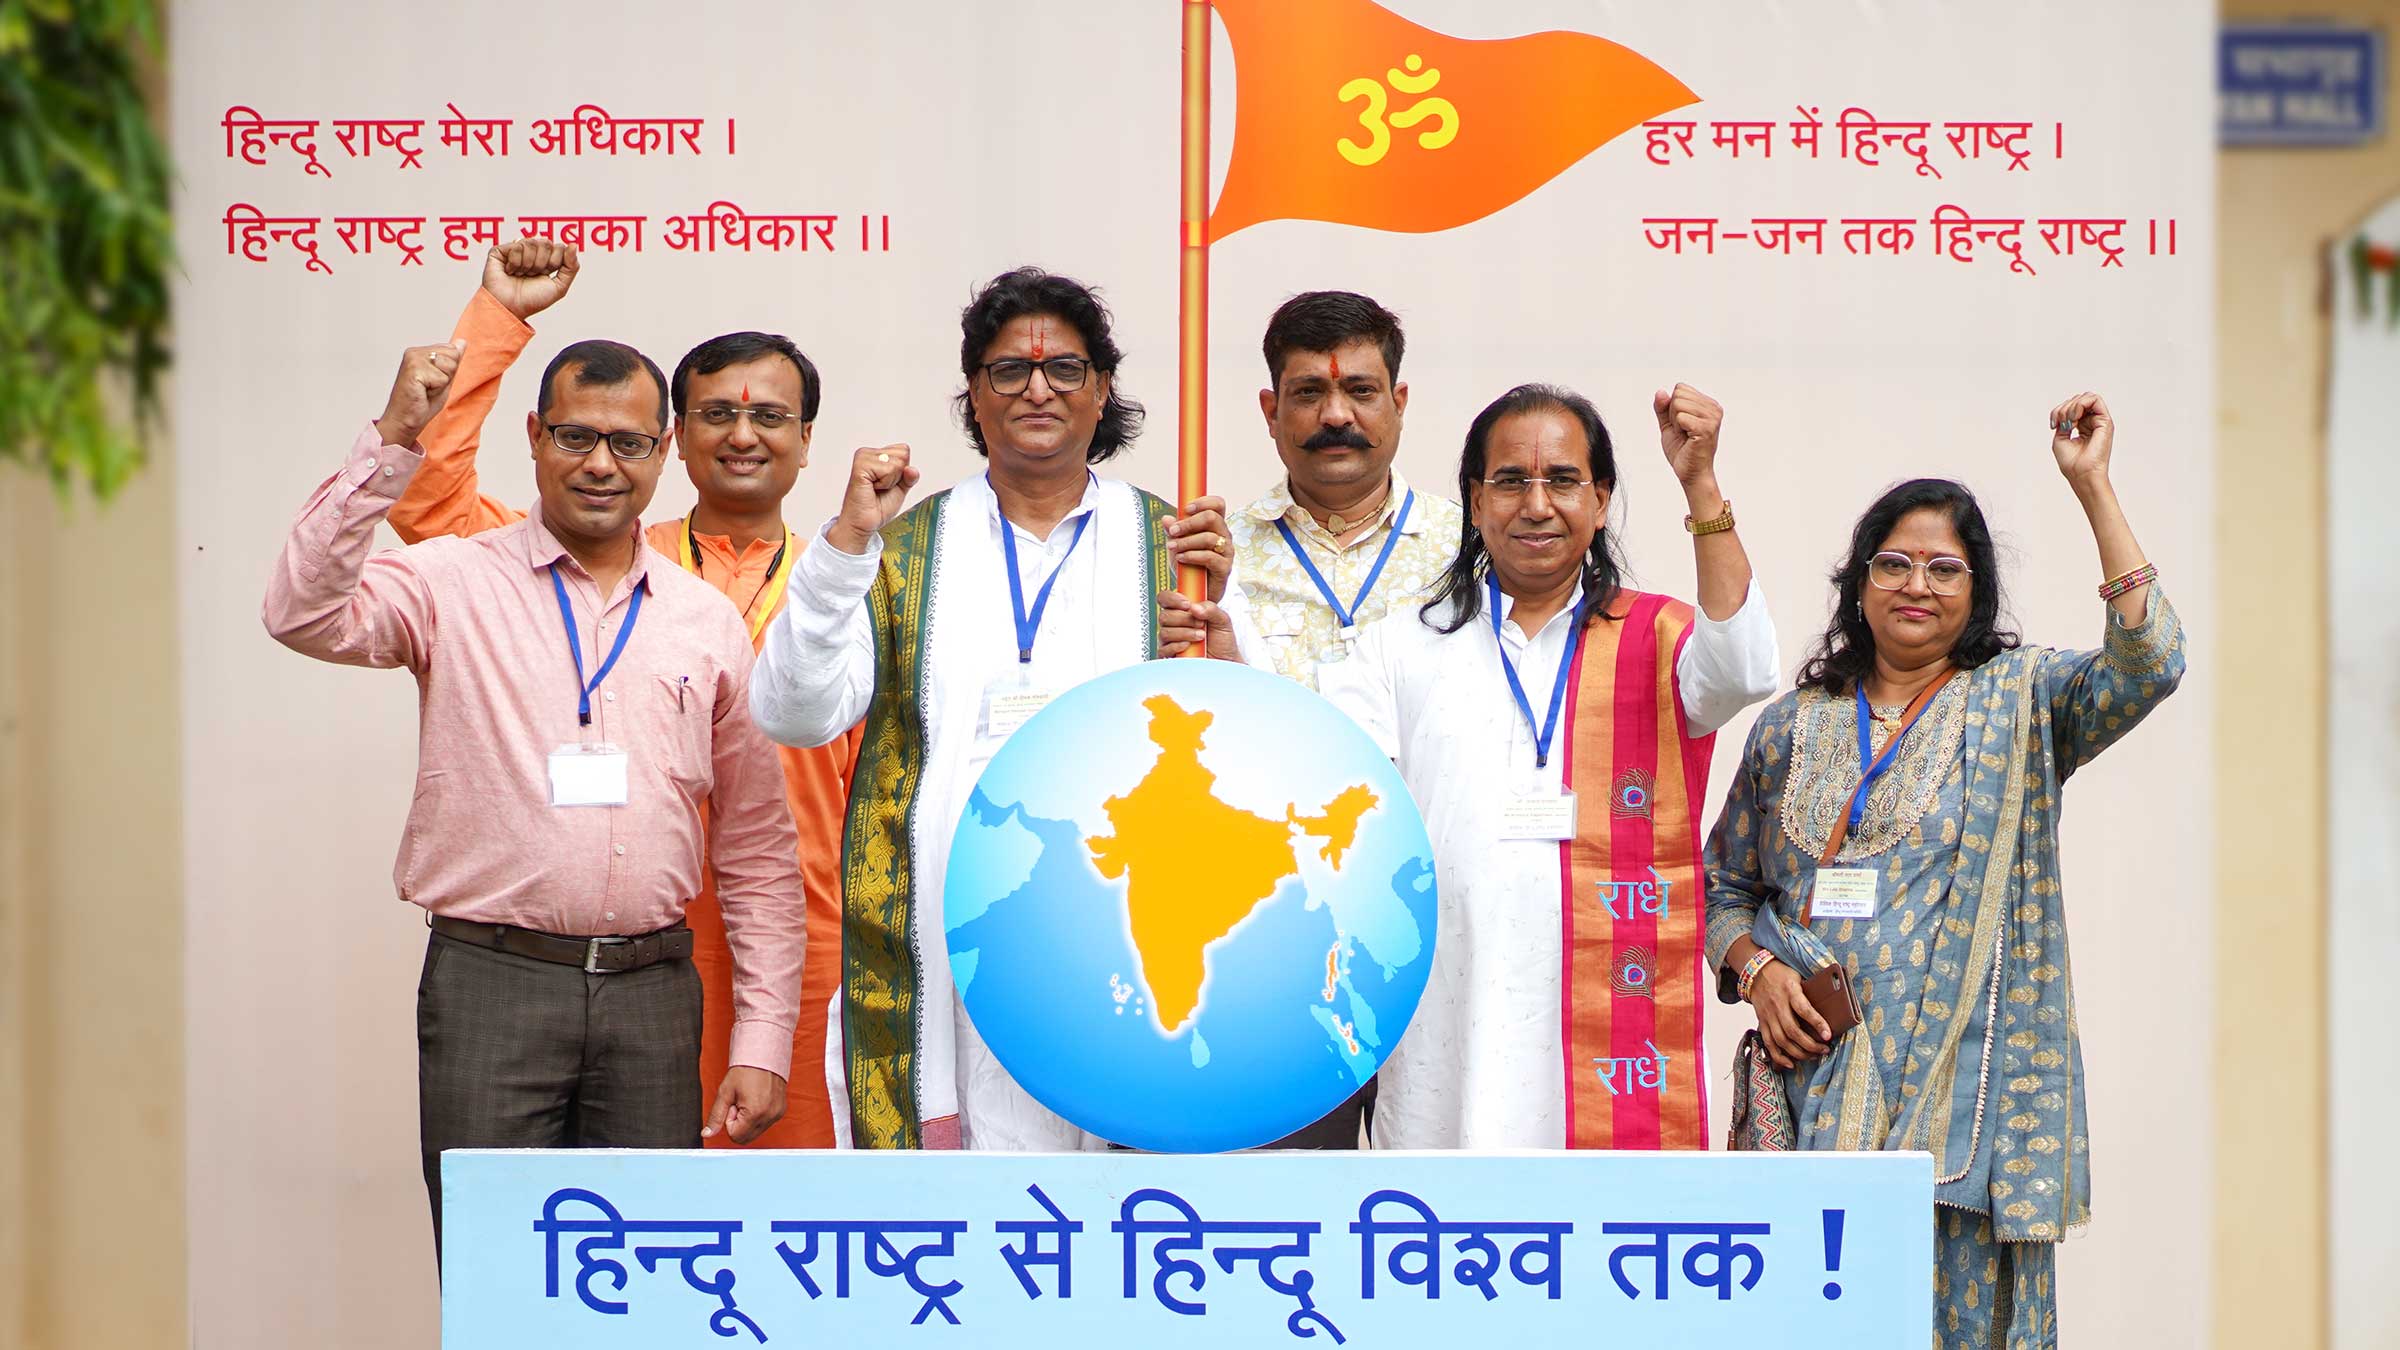 We resolve to propagate the ‘Hindu Rashtra’ across the world !